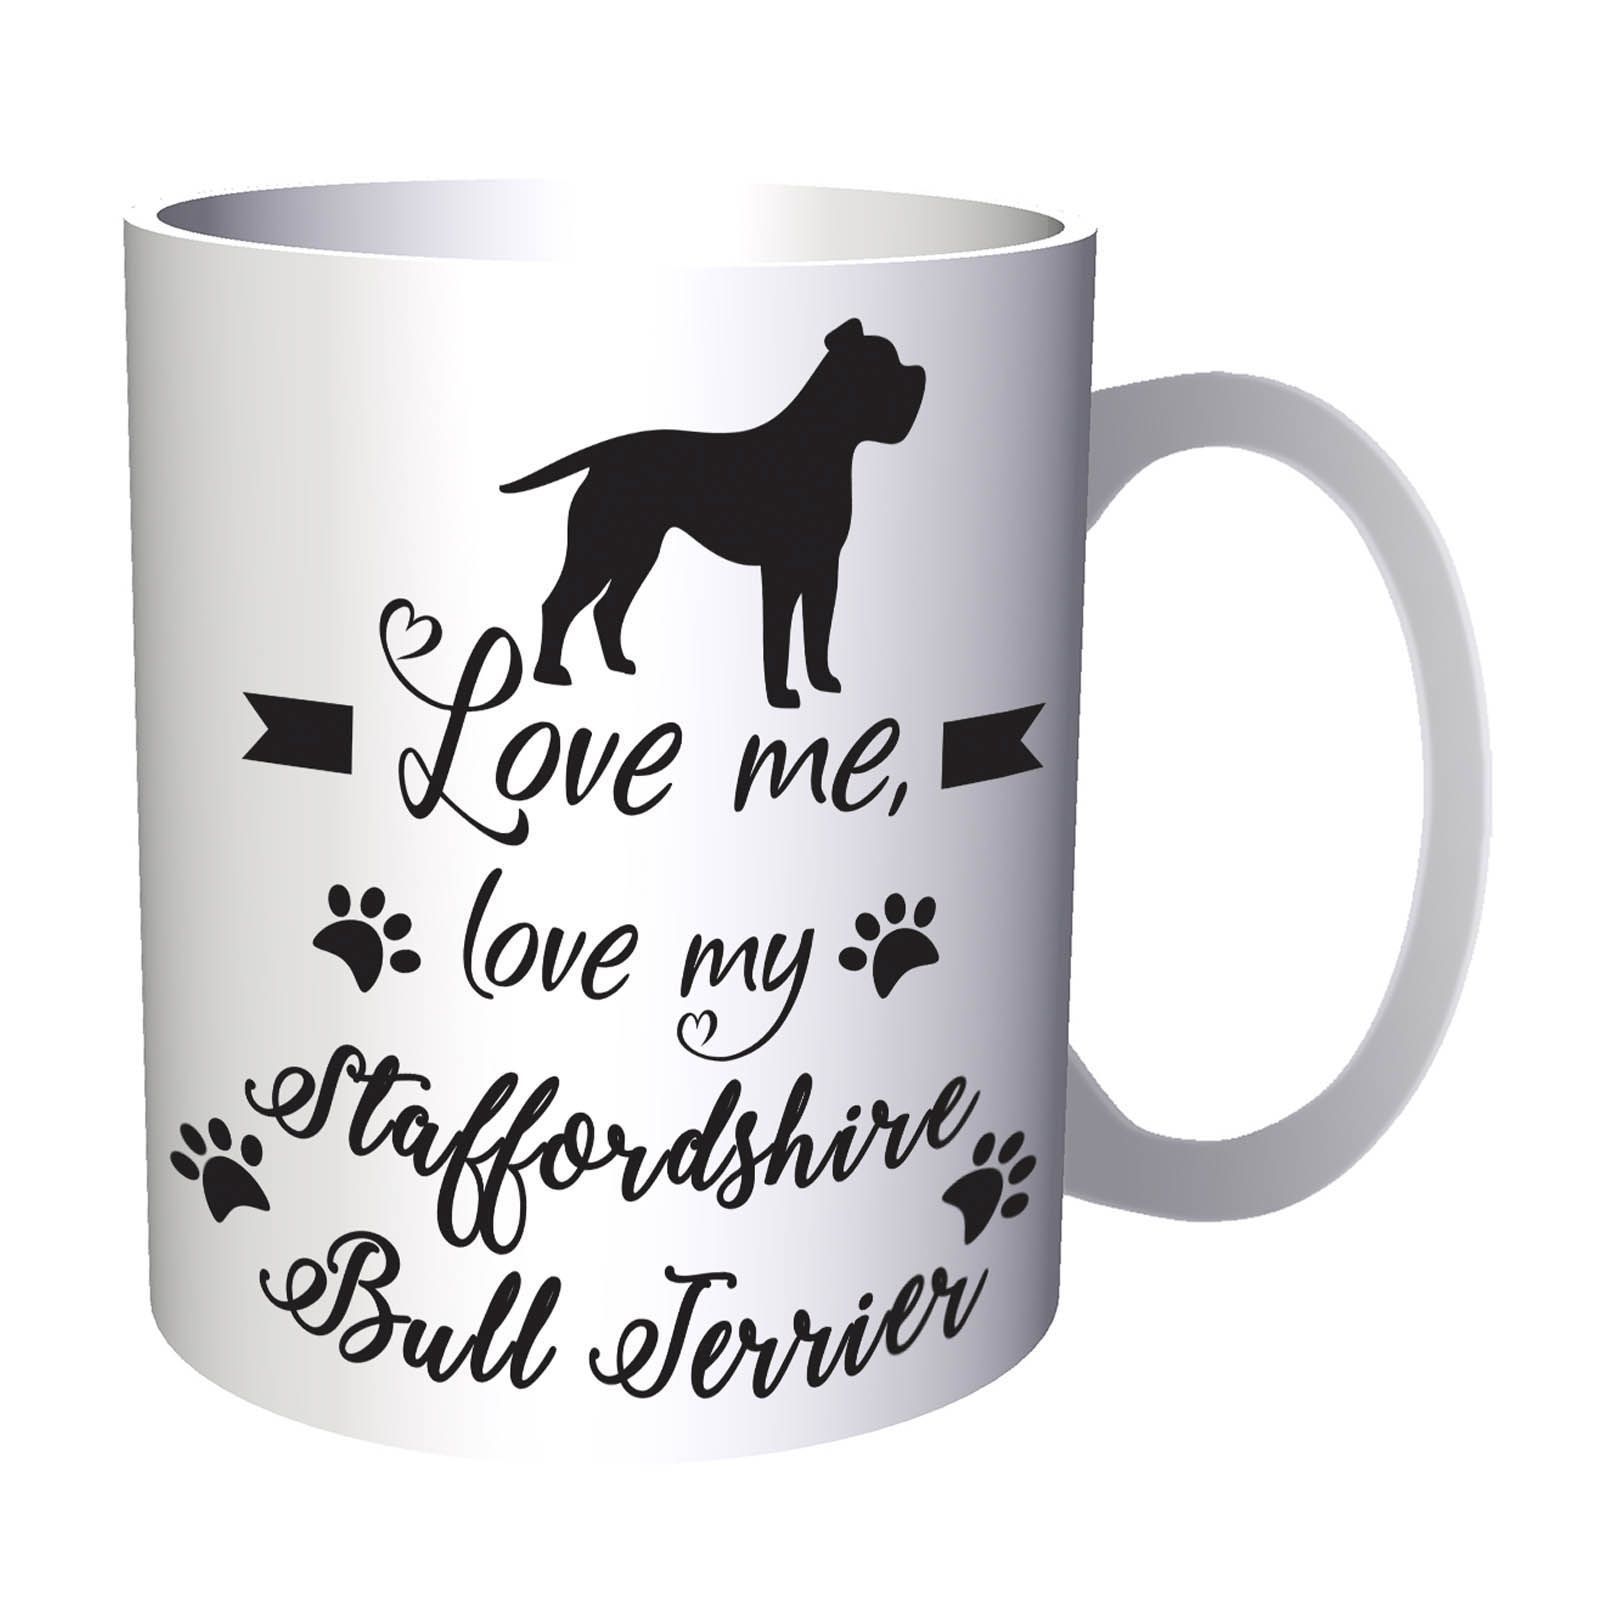 Love me love my Staffordshire bull terrier 11oz Mug bb645 - $11.98